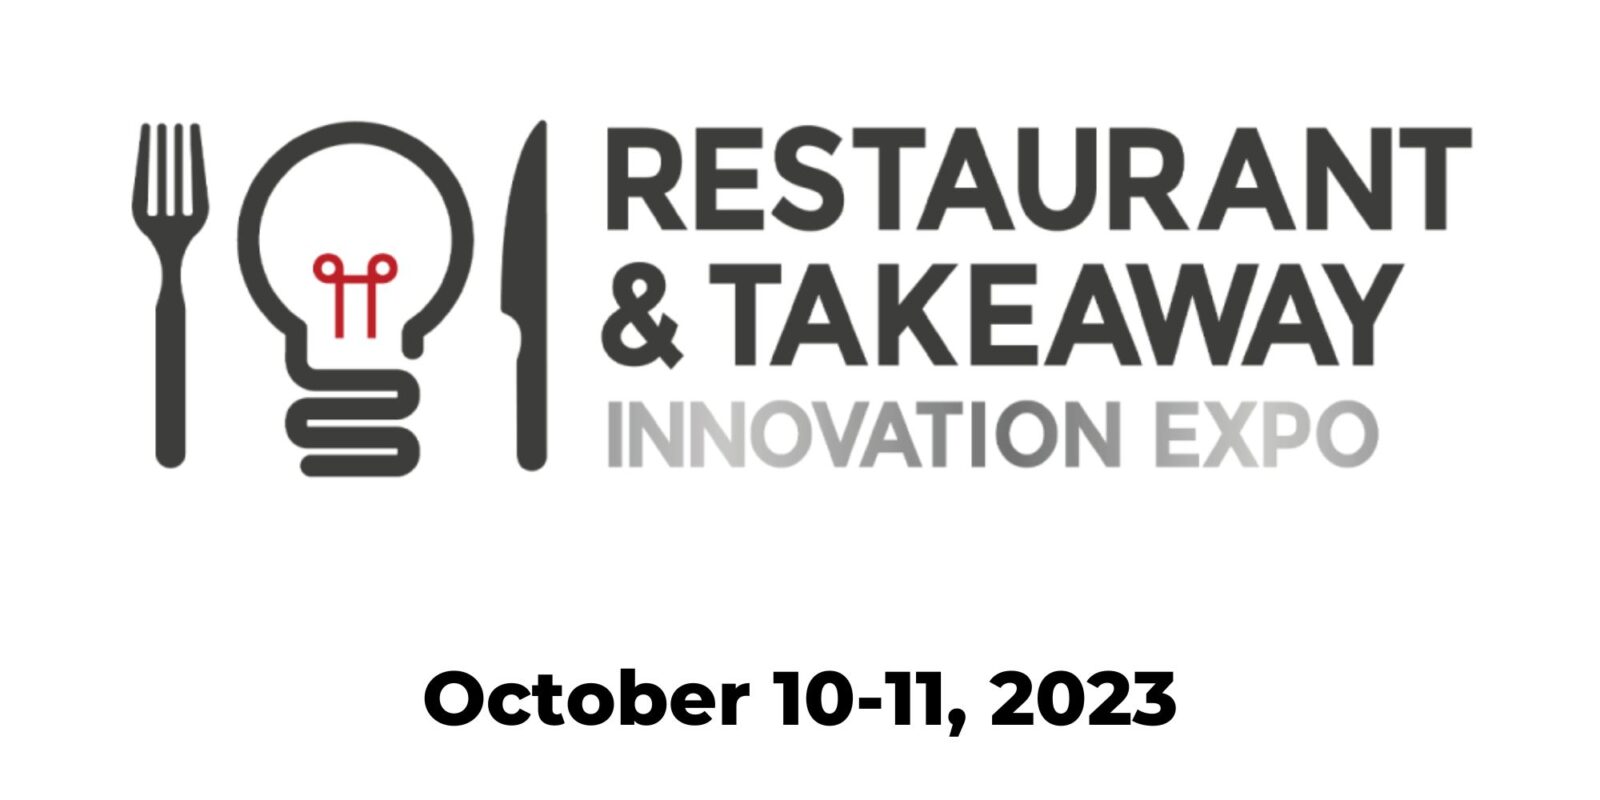 Restaurant & Takeaway Innovation Expo banner for October 10-11, 2023